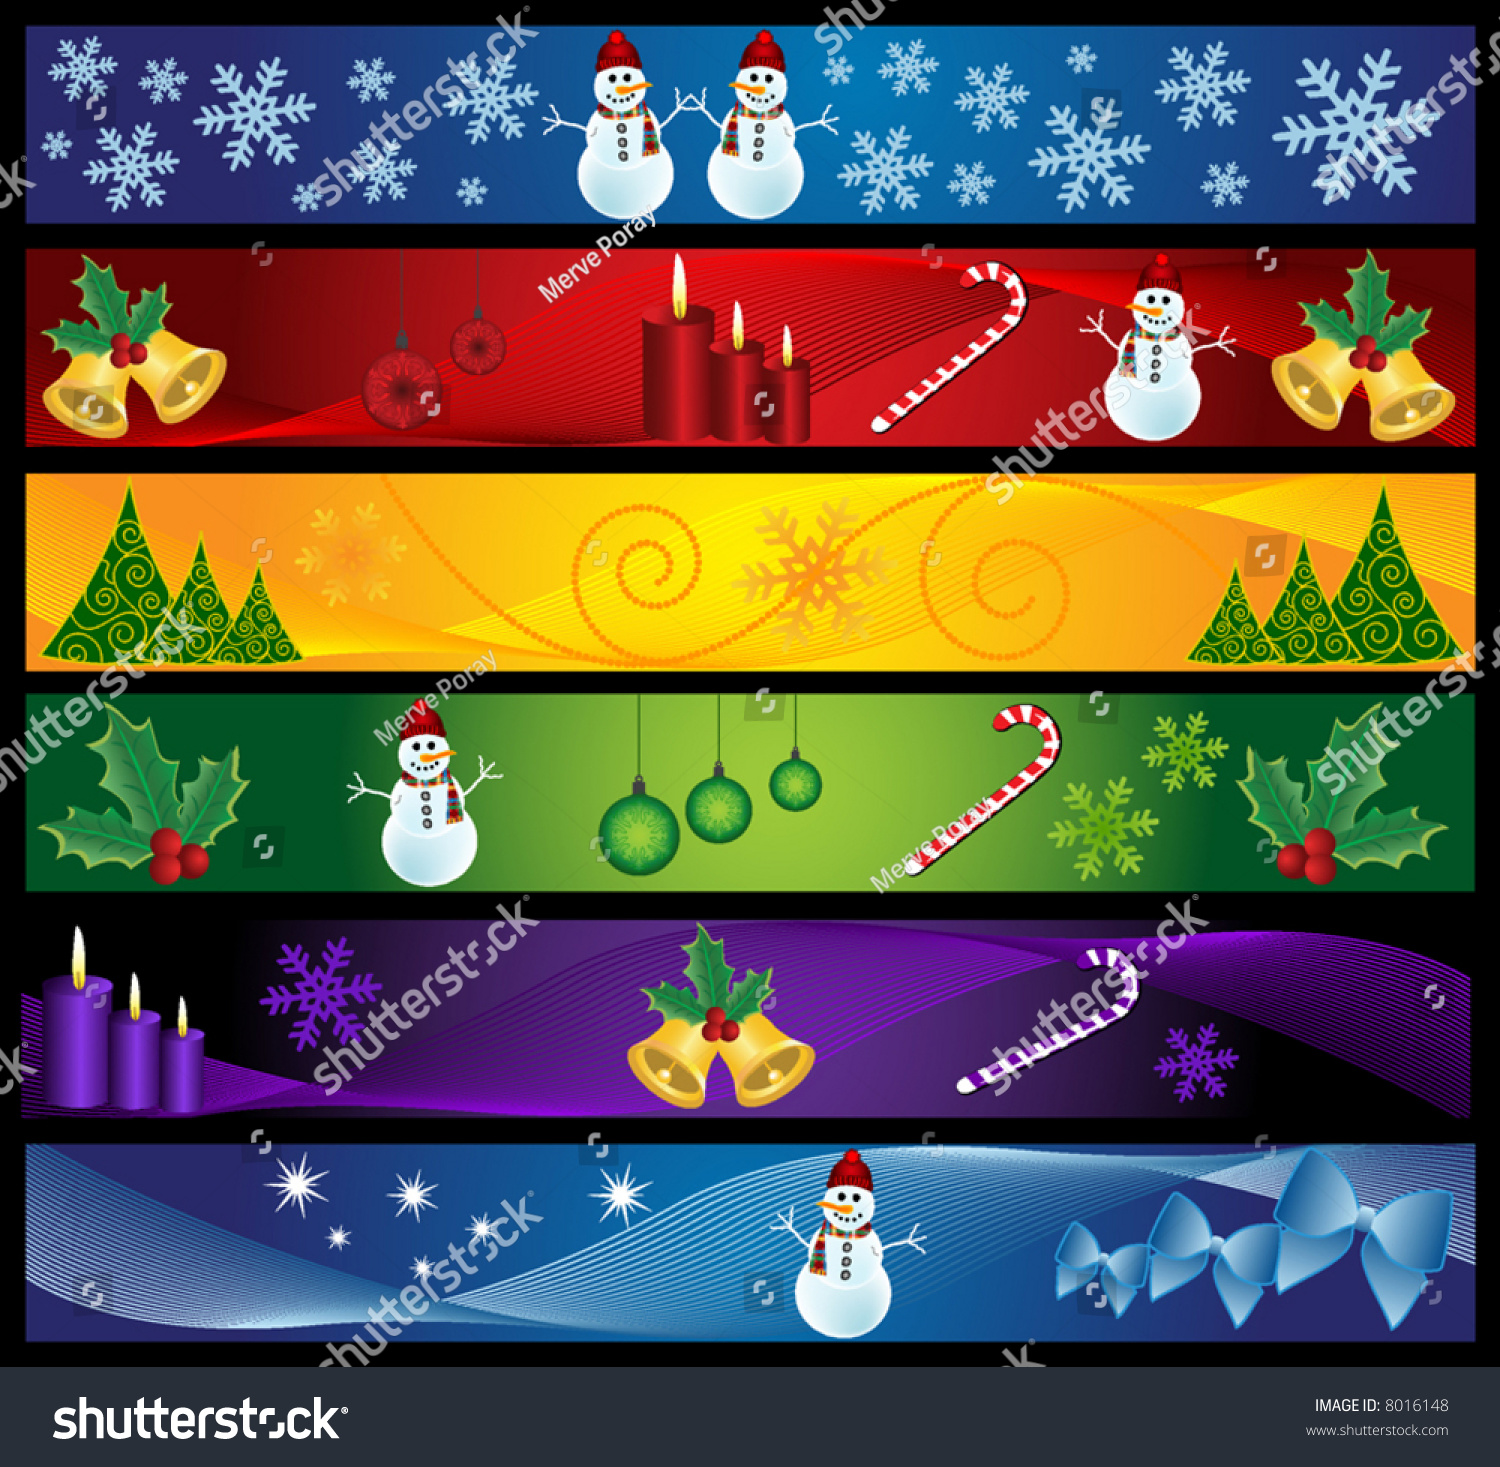 Vector Christmas Banners - 8016148 : Shutterstock